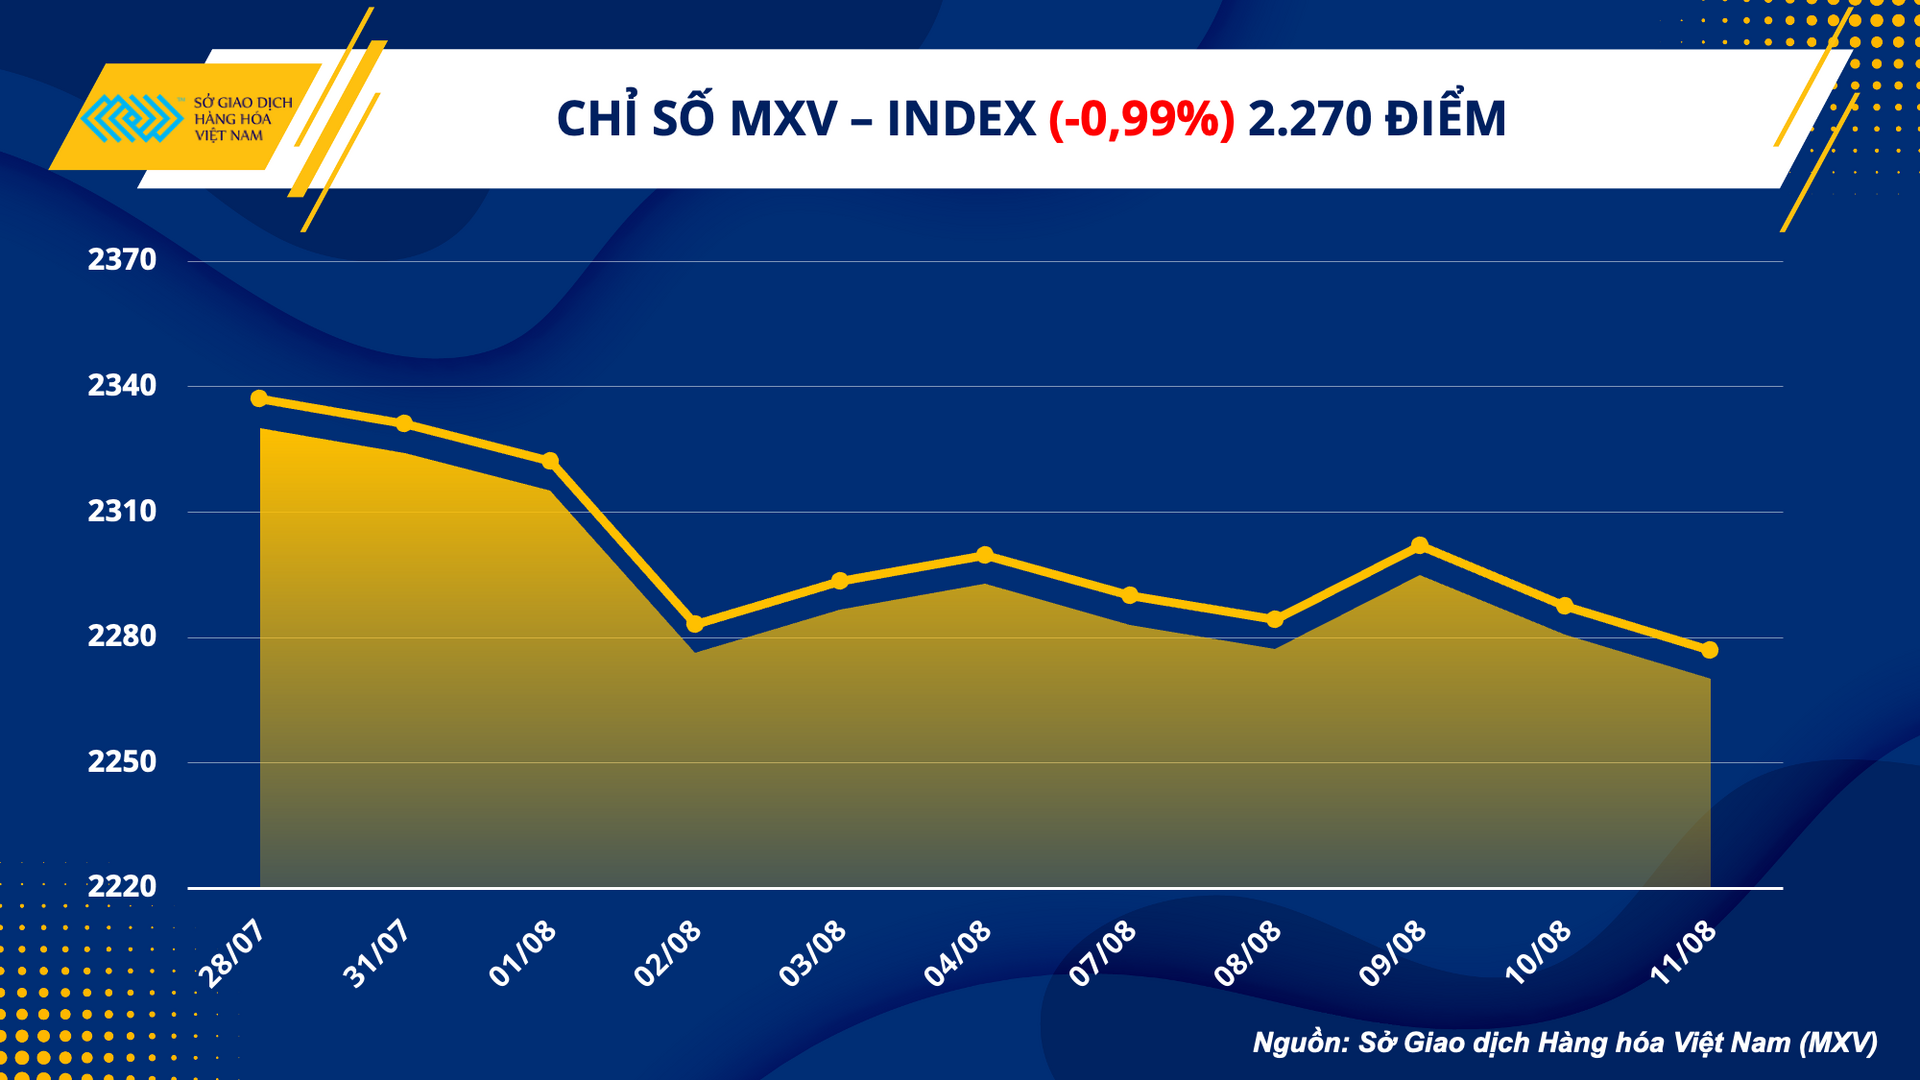 1. mxv - index (34)